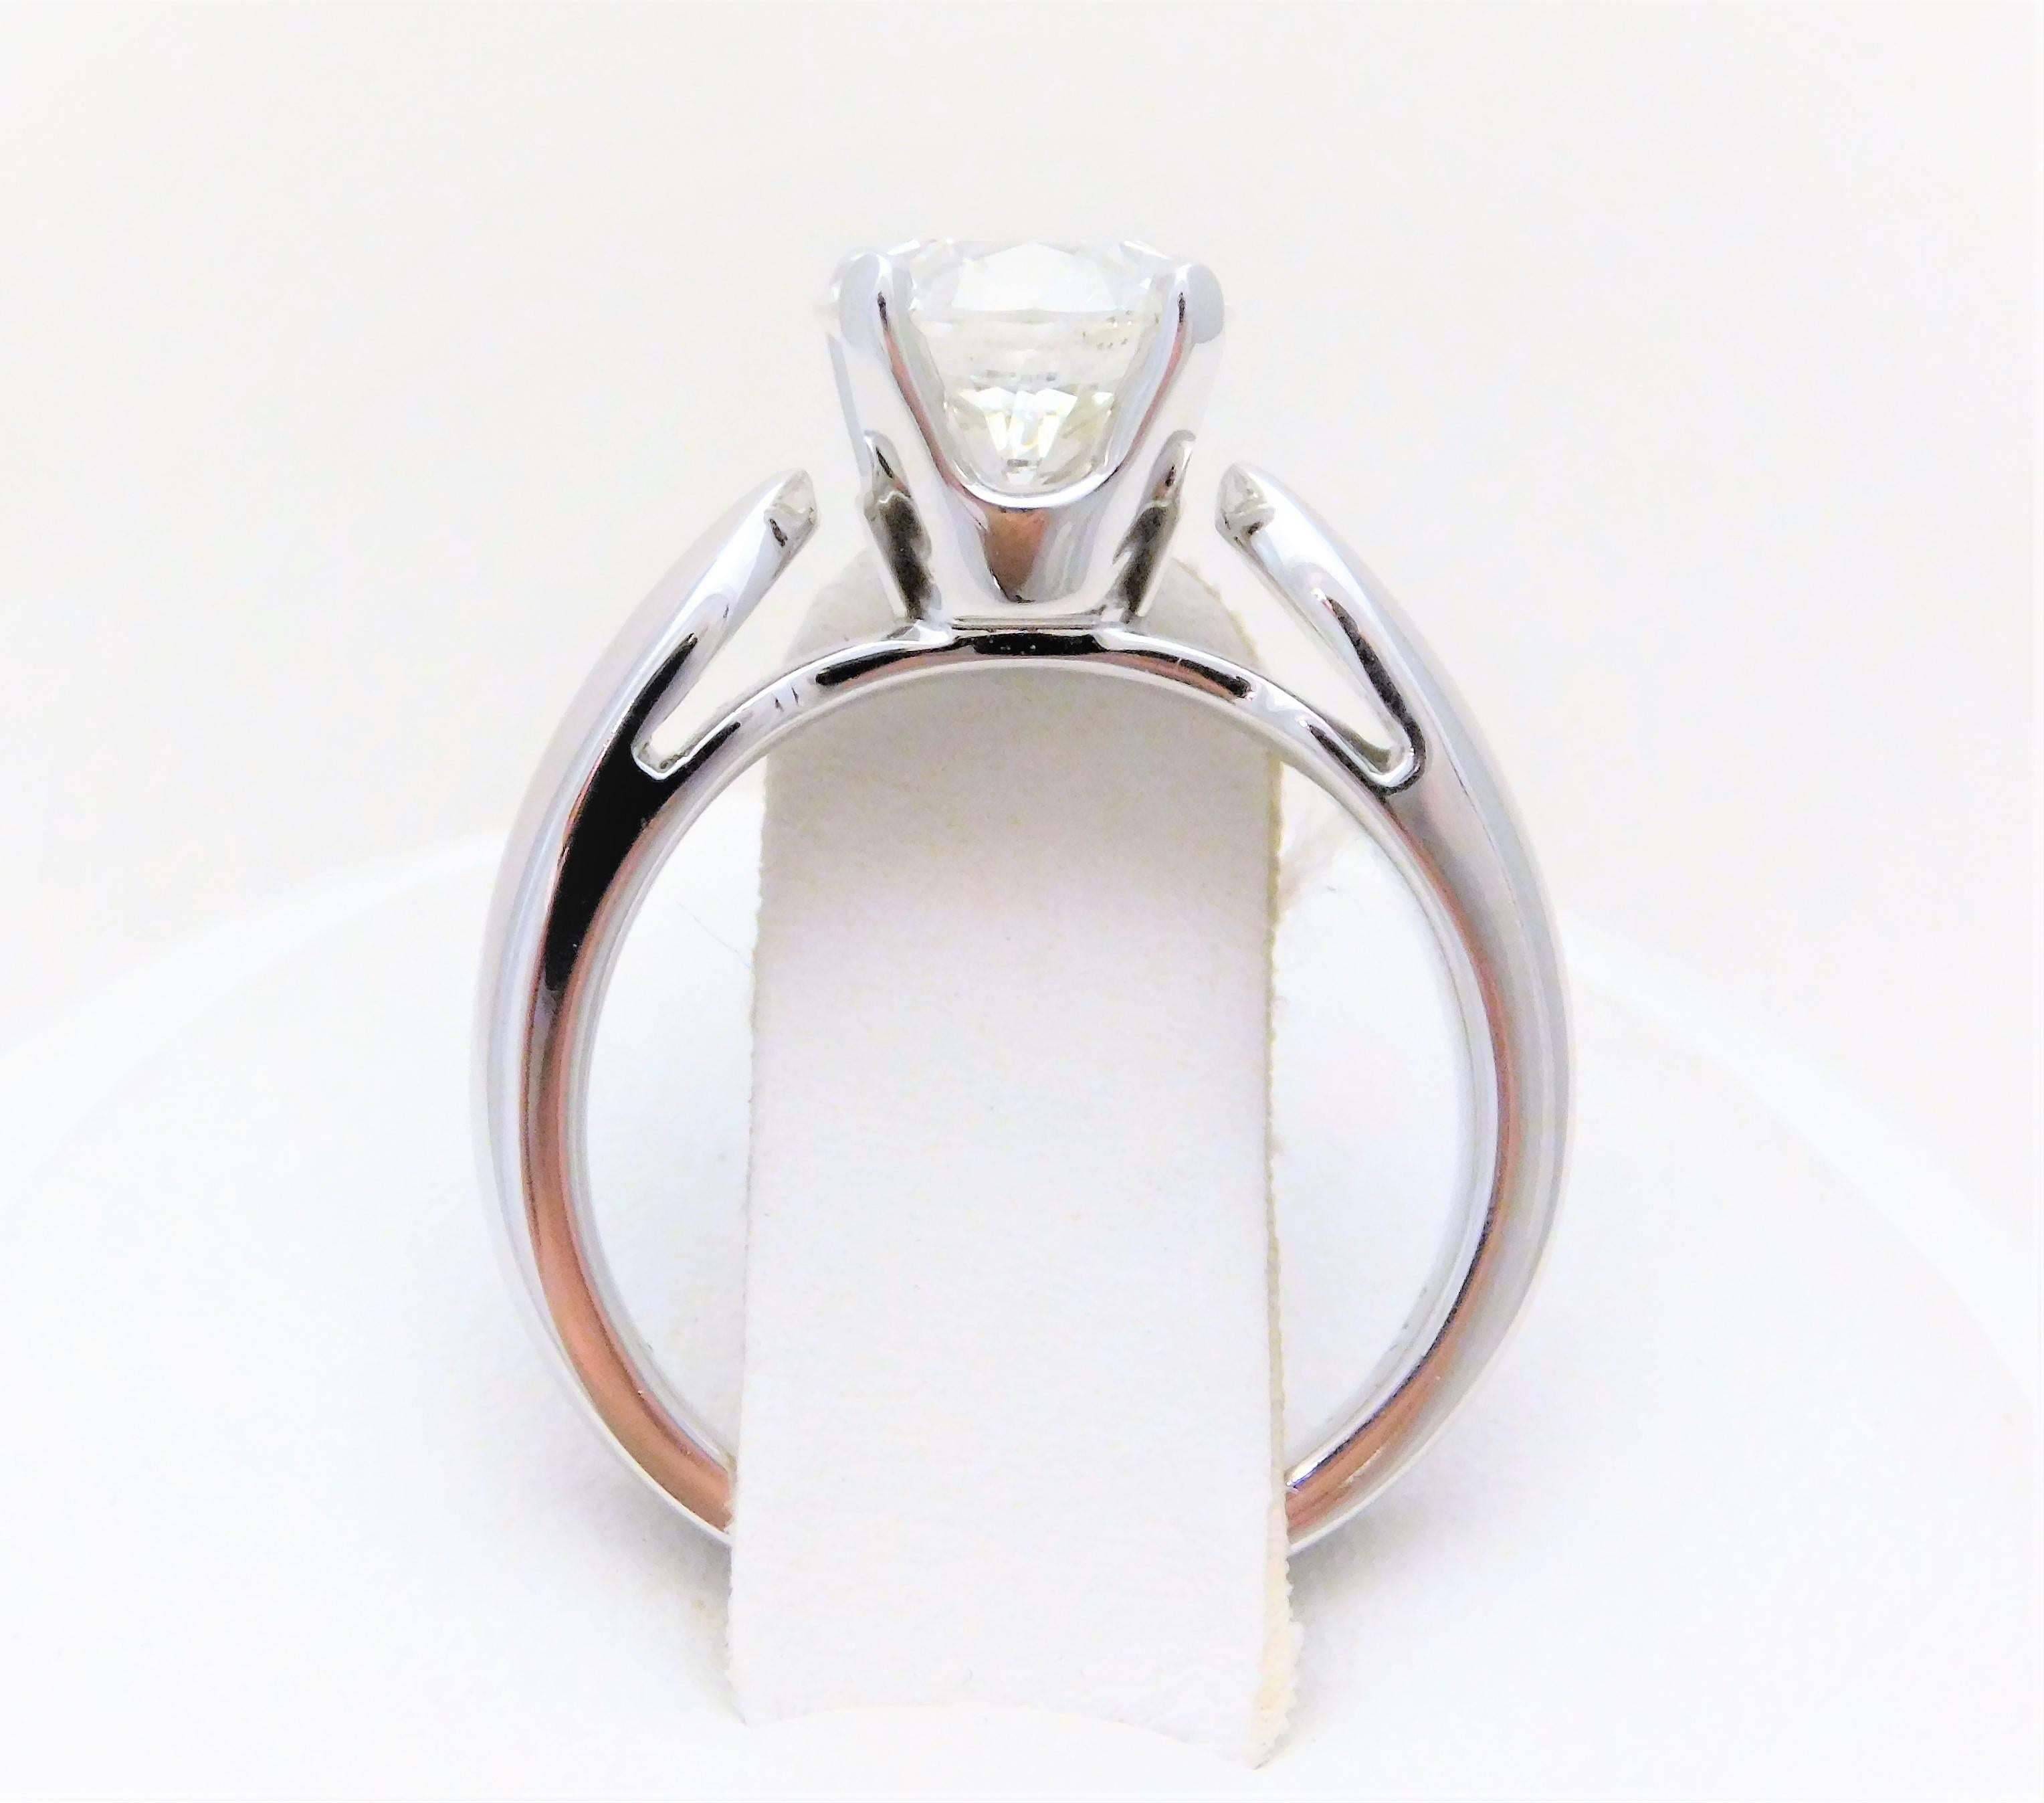 14 Karat Gold GIA Certified 1.28 Carat Round Brilliant Cut Diamond Ring For Sale 1